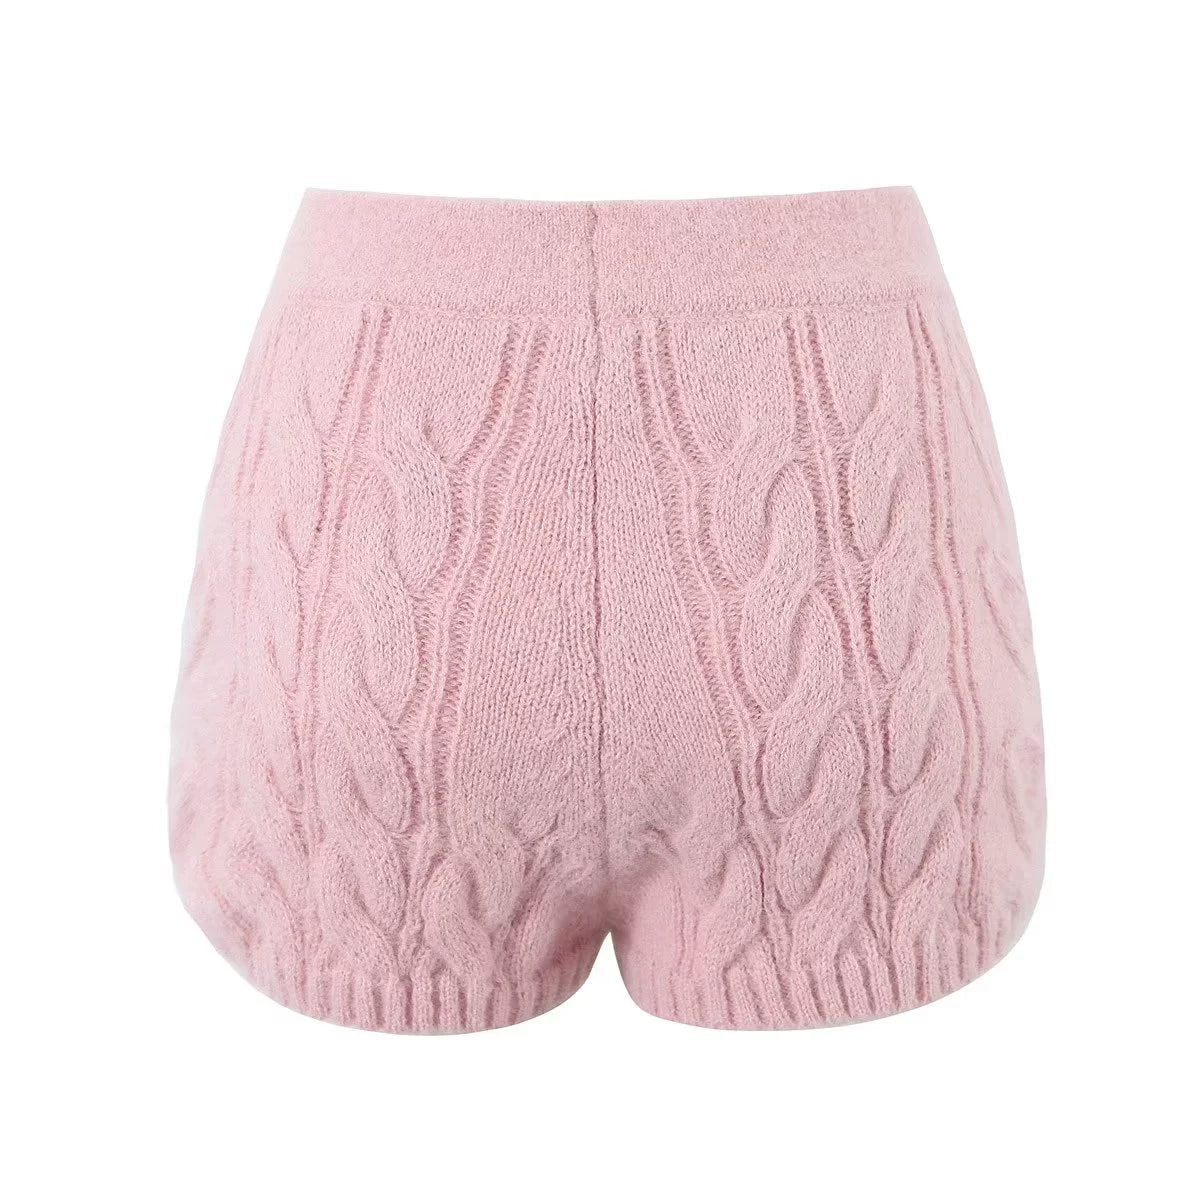 LaPose Fashion - Stella Knit Short & Top Set - Crochet Shorts, Crop Tops, Knitted Shorts, Knitted Tops, Romantic Tops, Shorts, Sleeveless Tops, Top